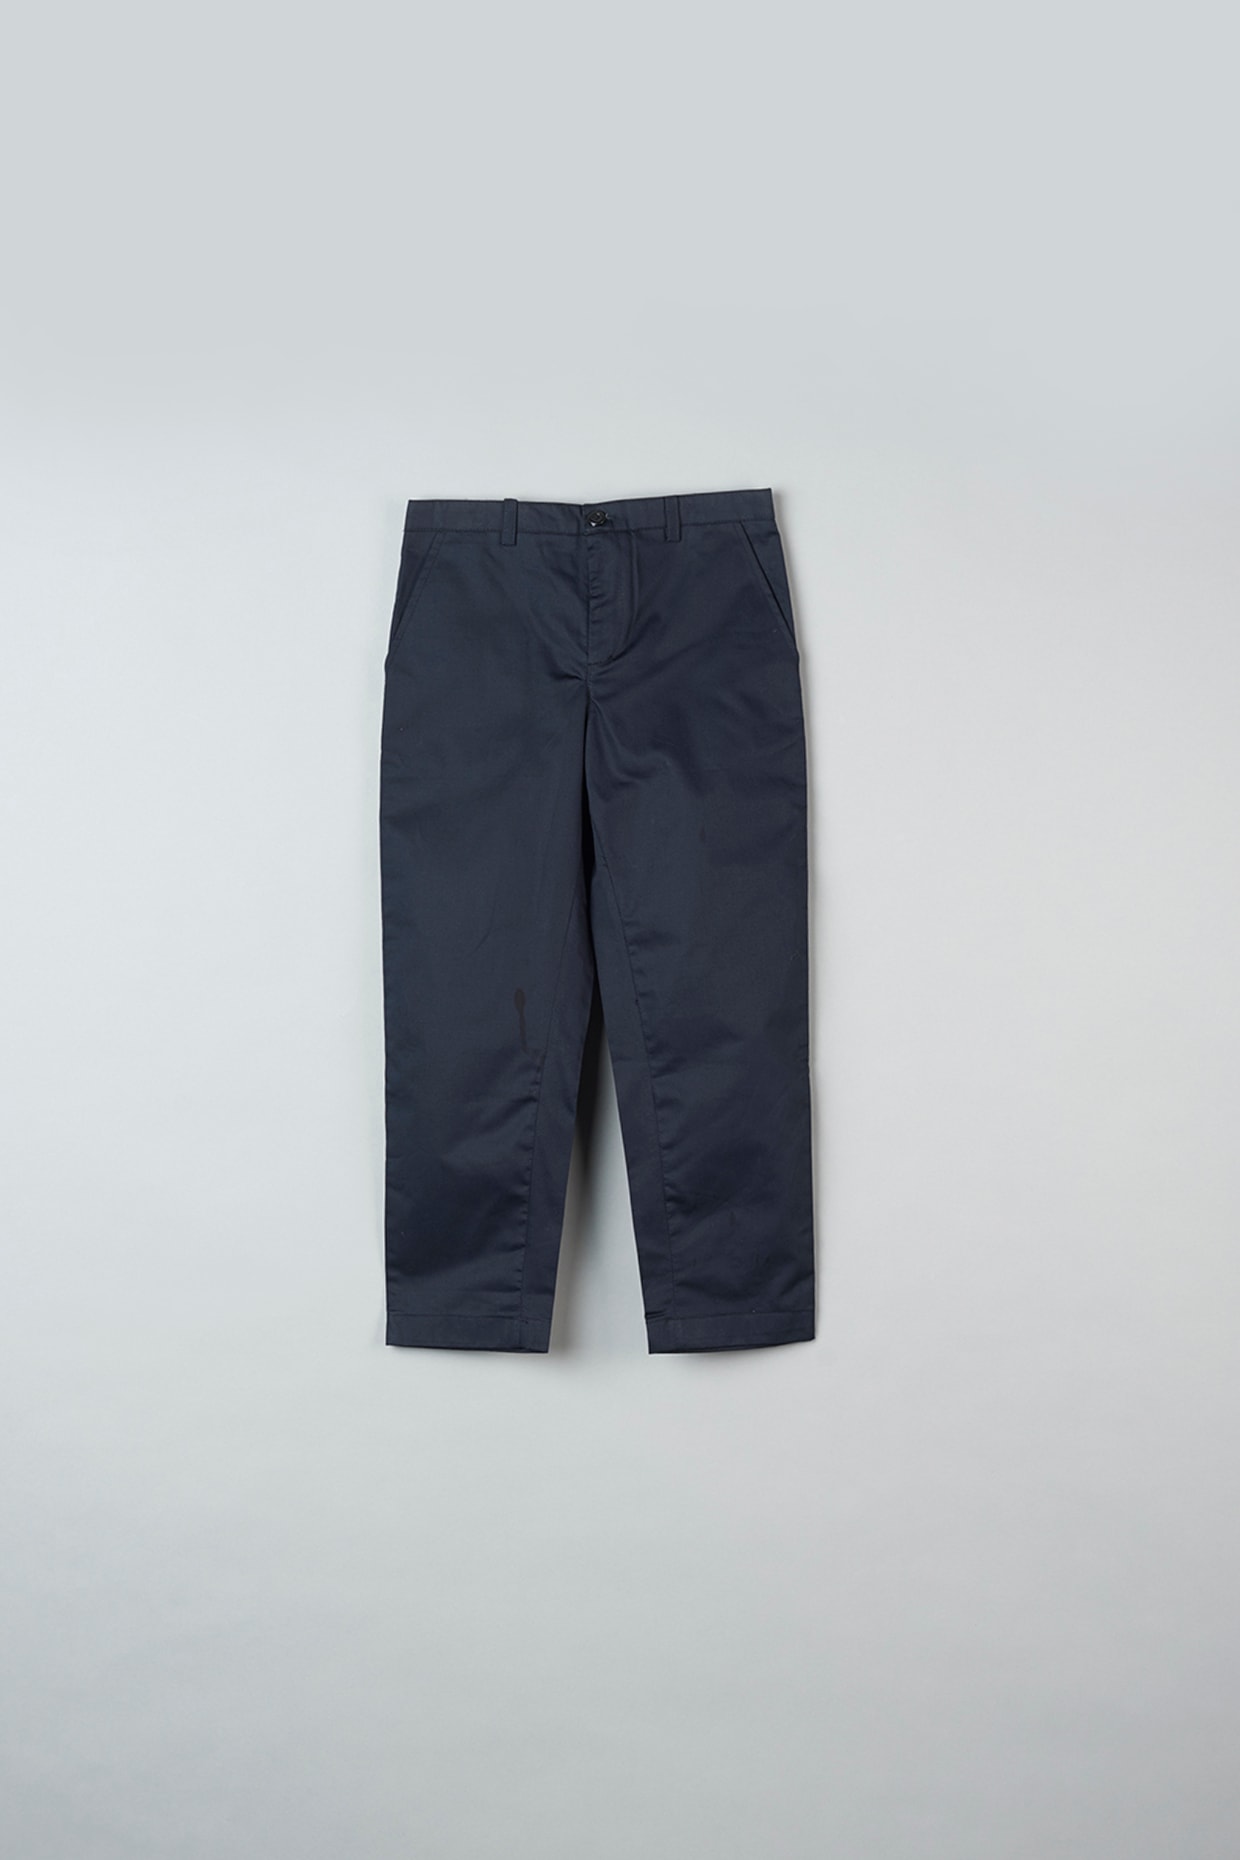 Buy Speedo mens delight 3 4 pants navy Online | Brands For Less